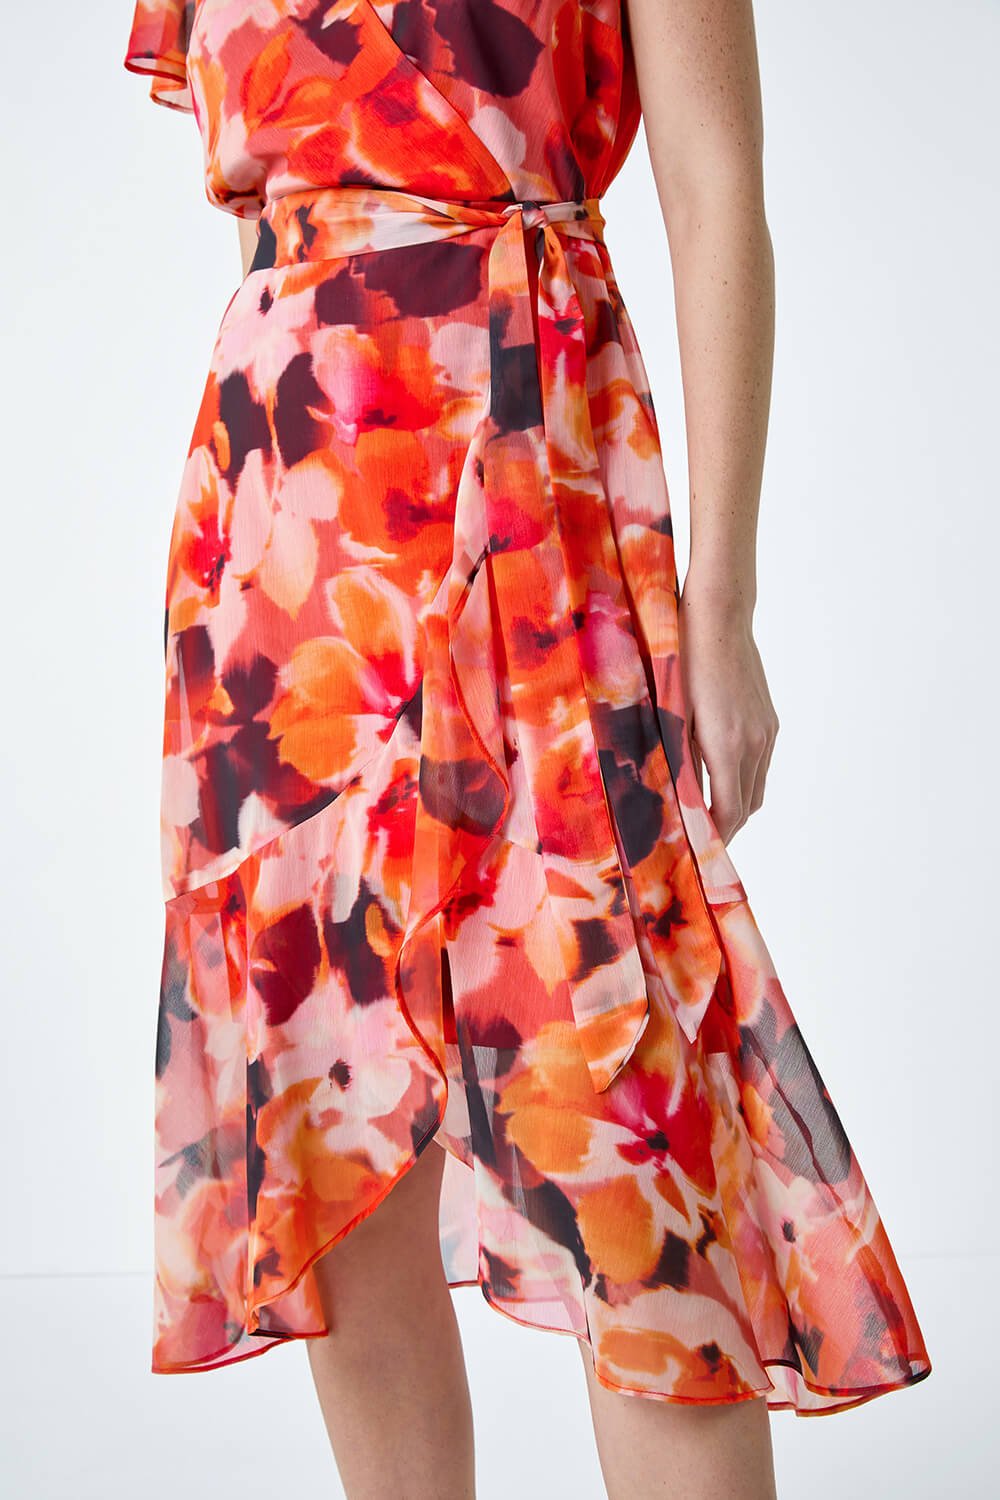 ORANGE Floral Print Chiffon Wrap Dress, Image 5 of 5